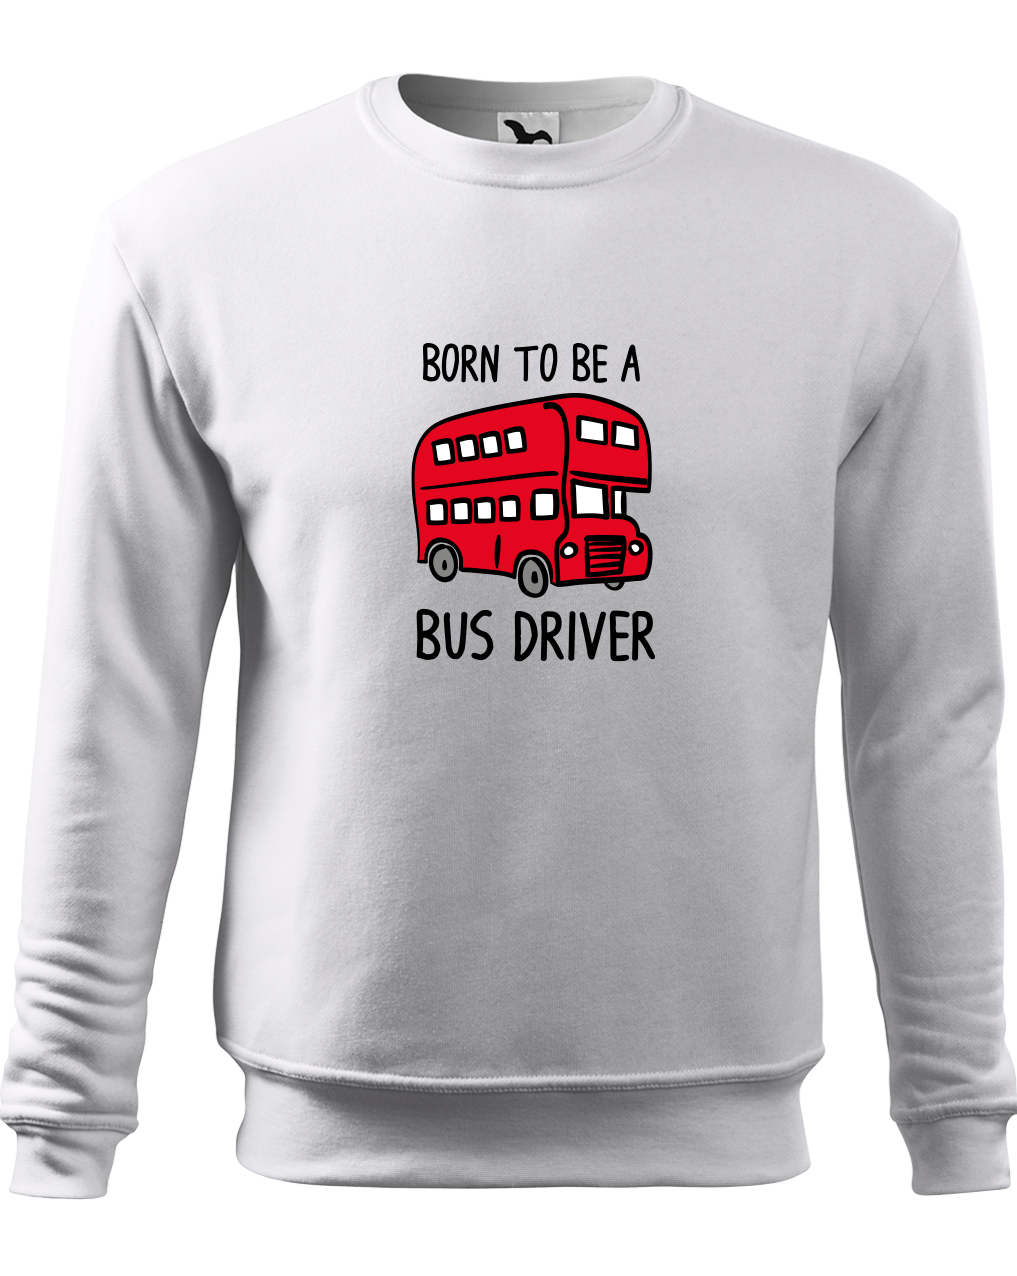 Mikina pro řidiče autobusu - Born to be a bus driver Velikost: M, Barva: Bílá